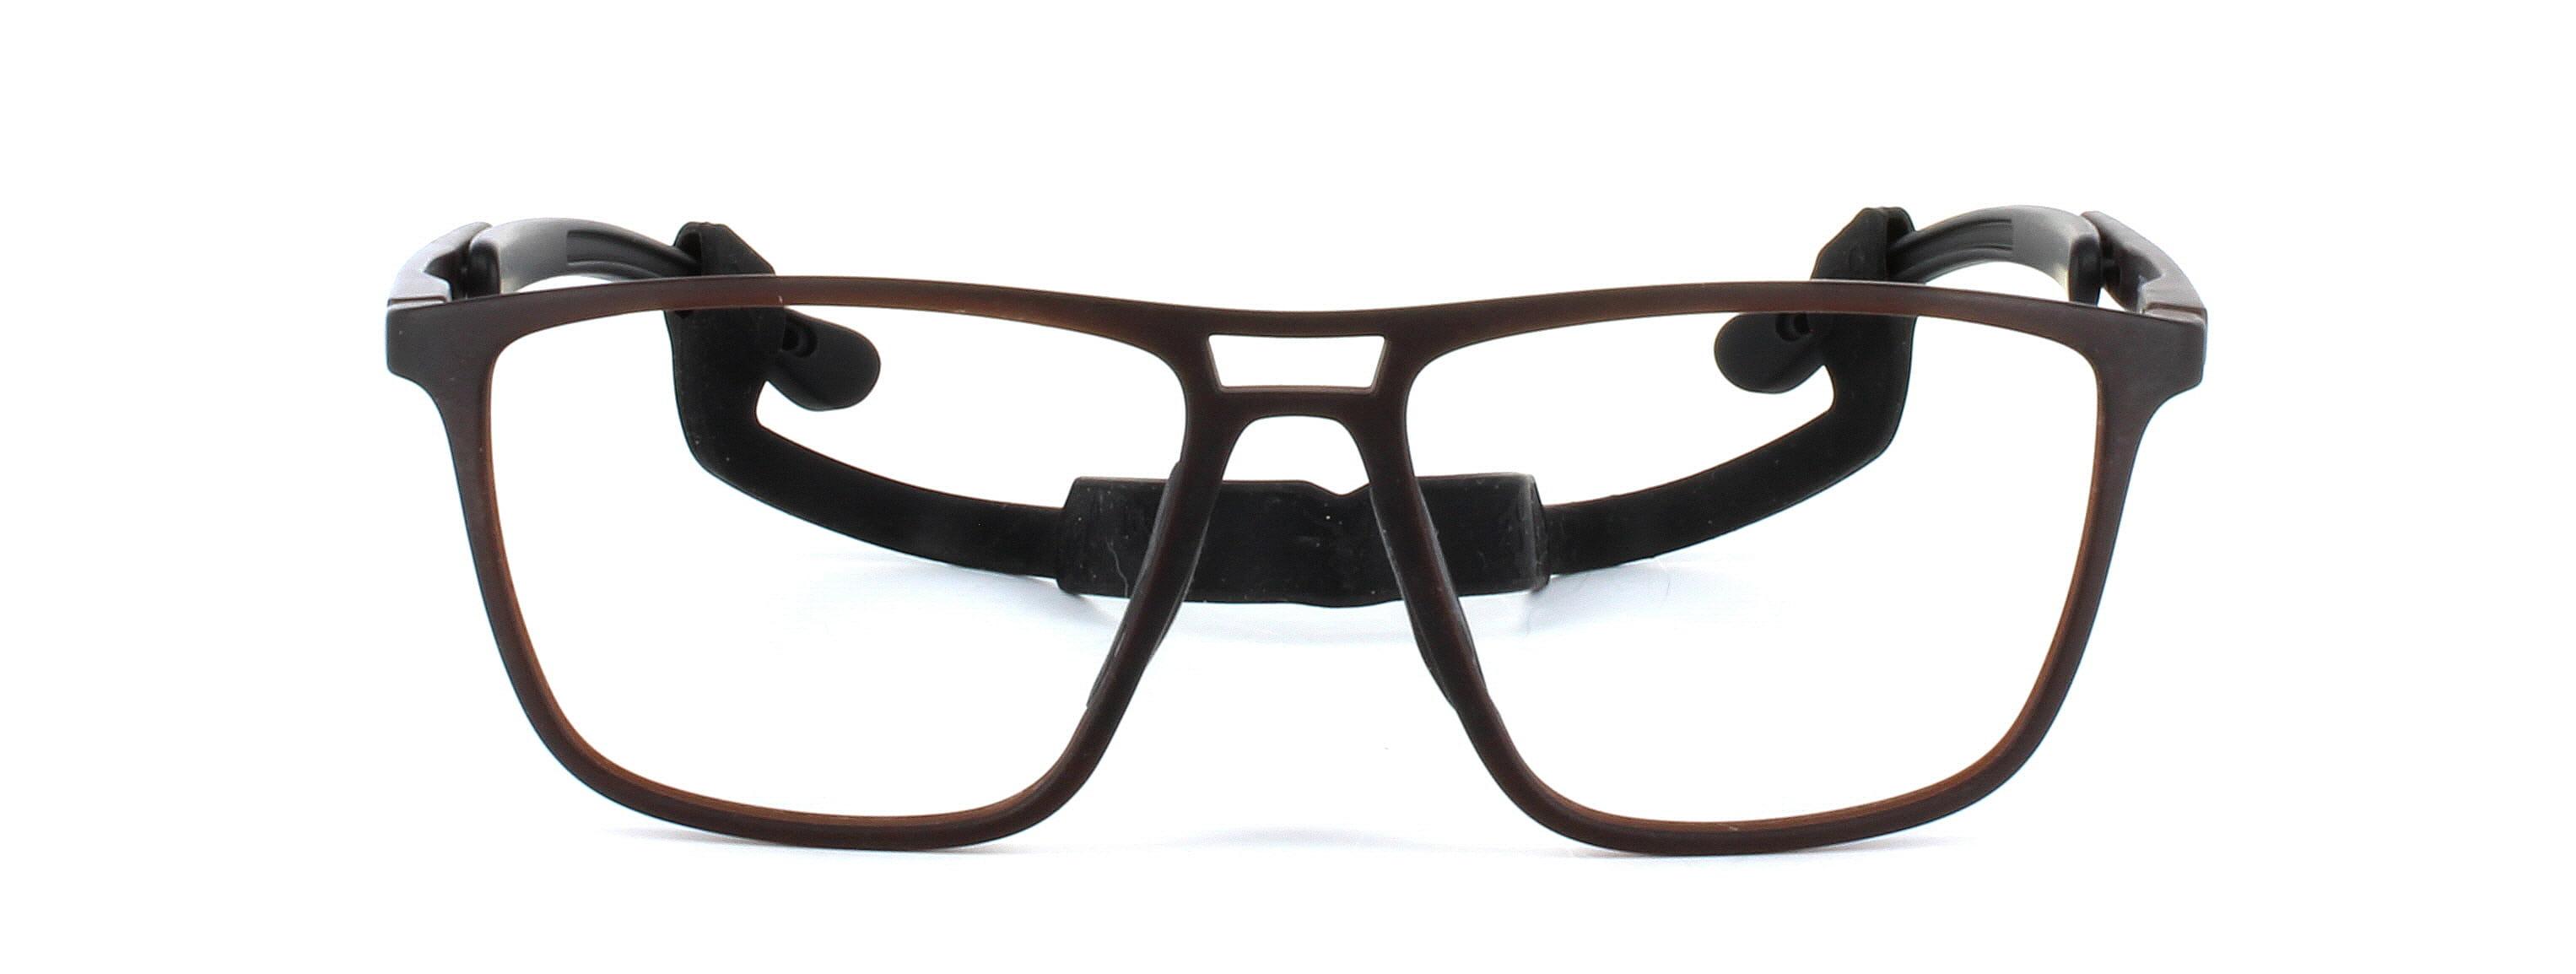 Decathlon - Men's prescription sports glasses frame in brown - image view 5